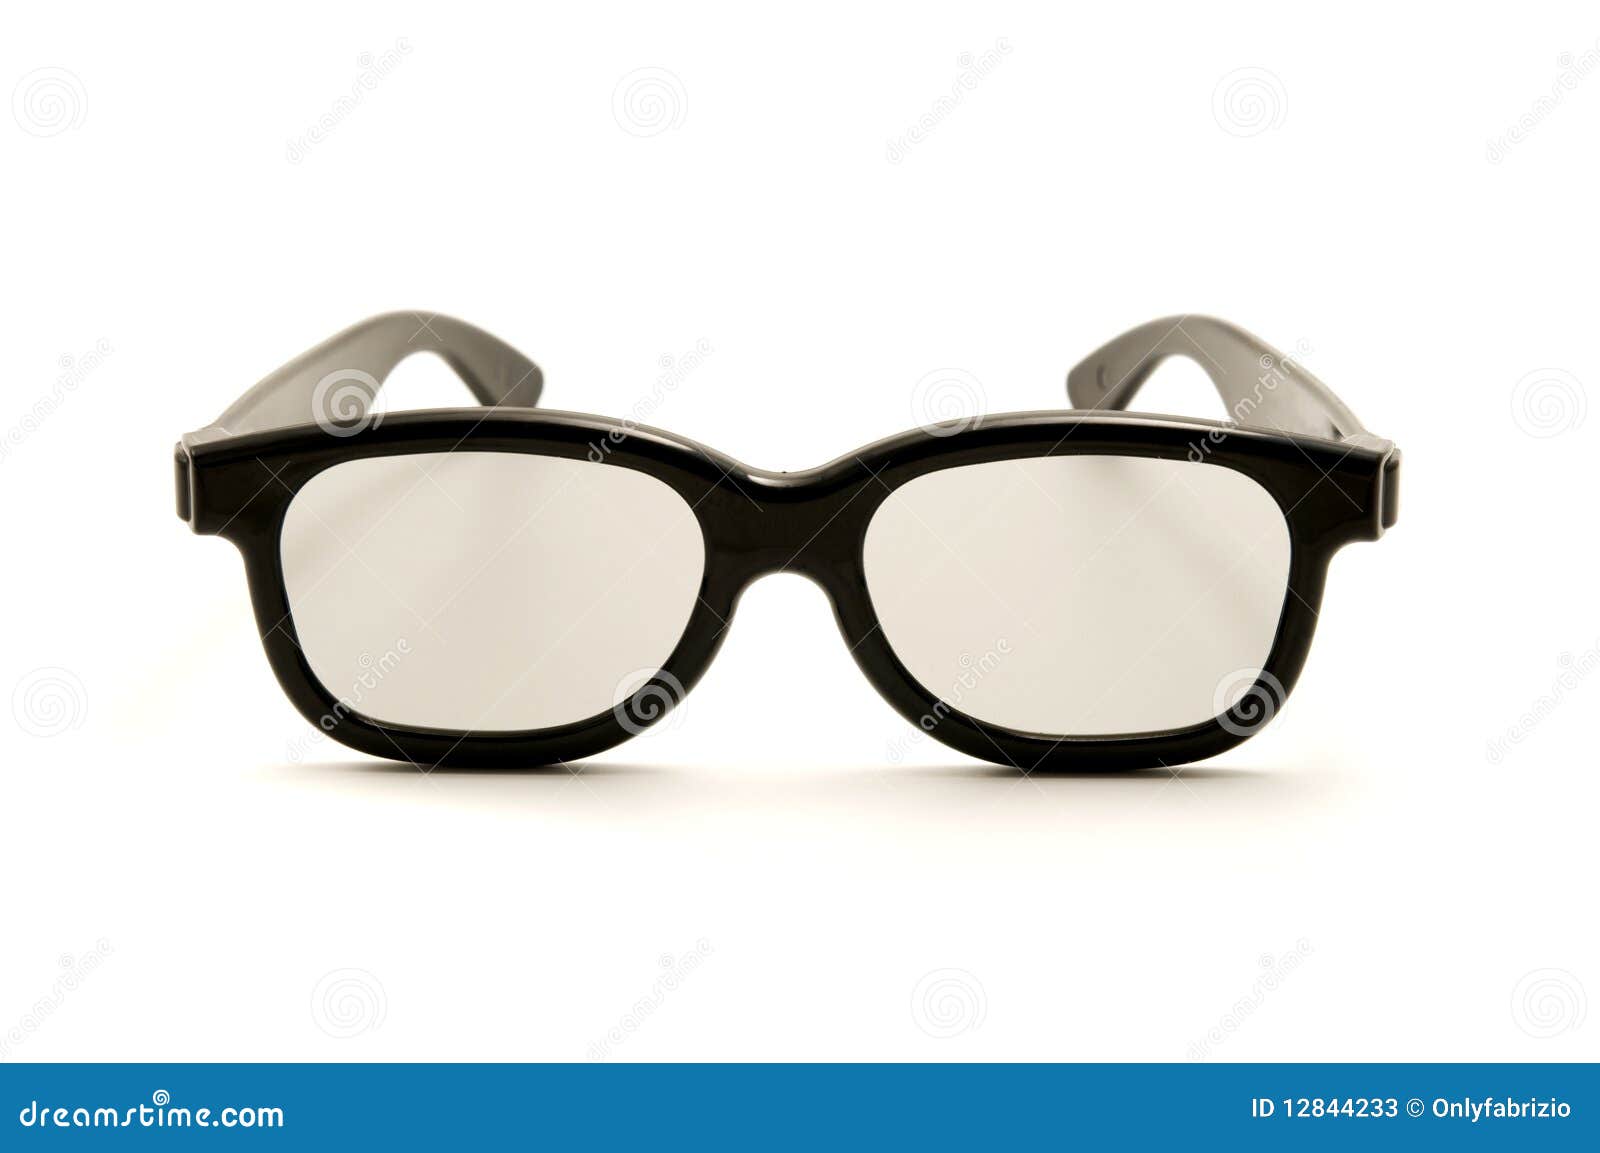 Polarized 3D glasses stock image. Image of studio, filter - 12844233